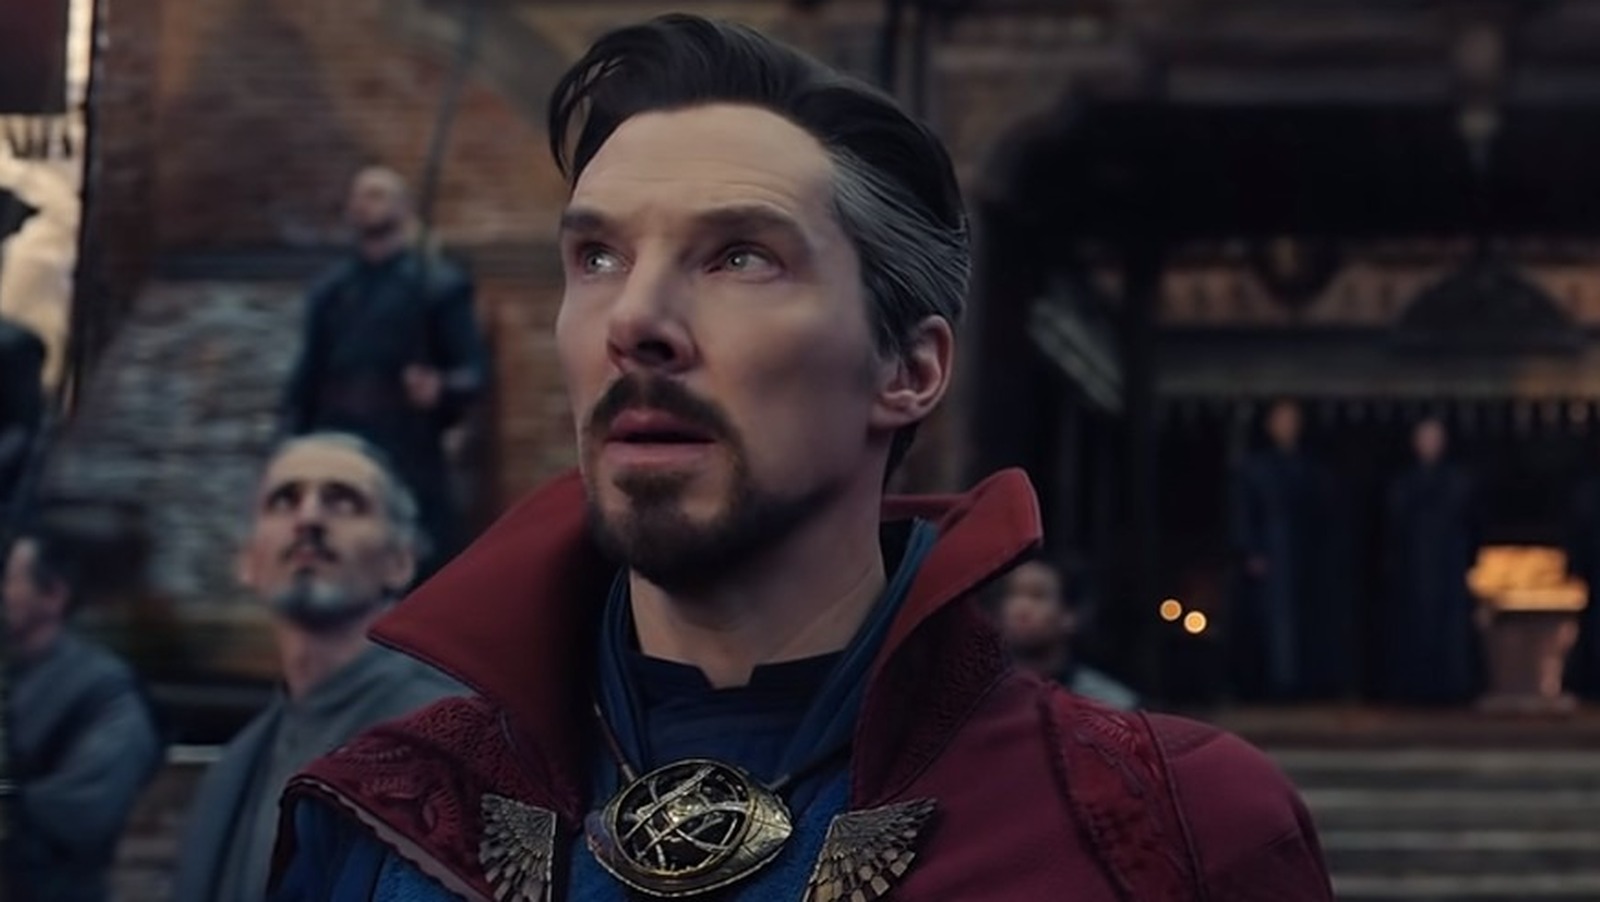 Benedict Cumberbatch as Dr. Stephen Strange at Kamar-Taj in Doctor Strange in the Multiverse of Madness (2022).